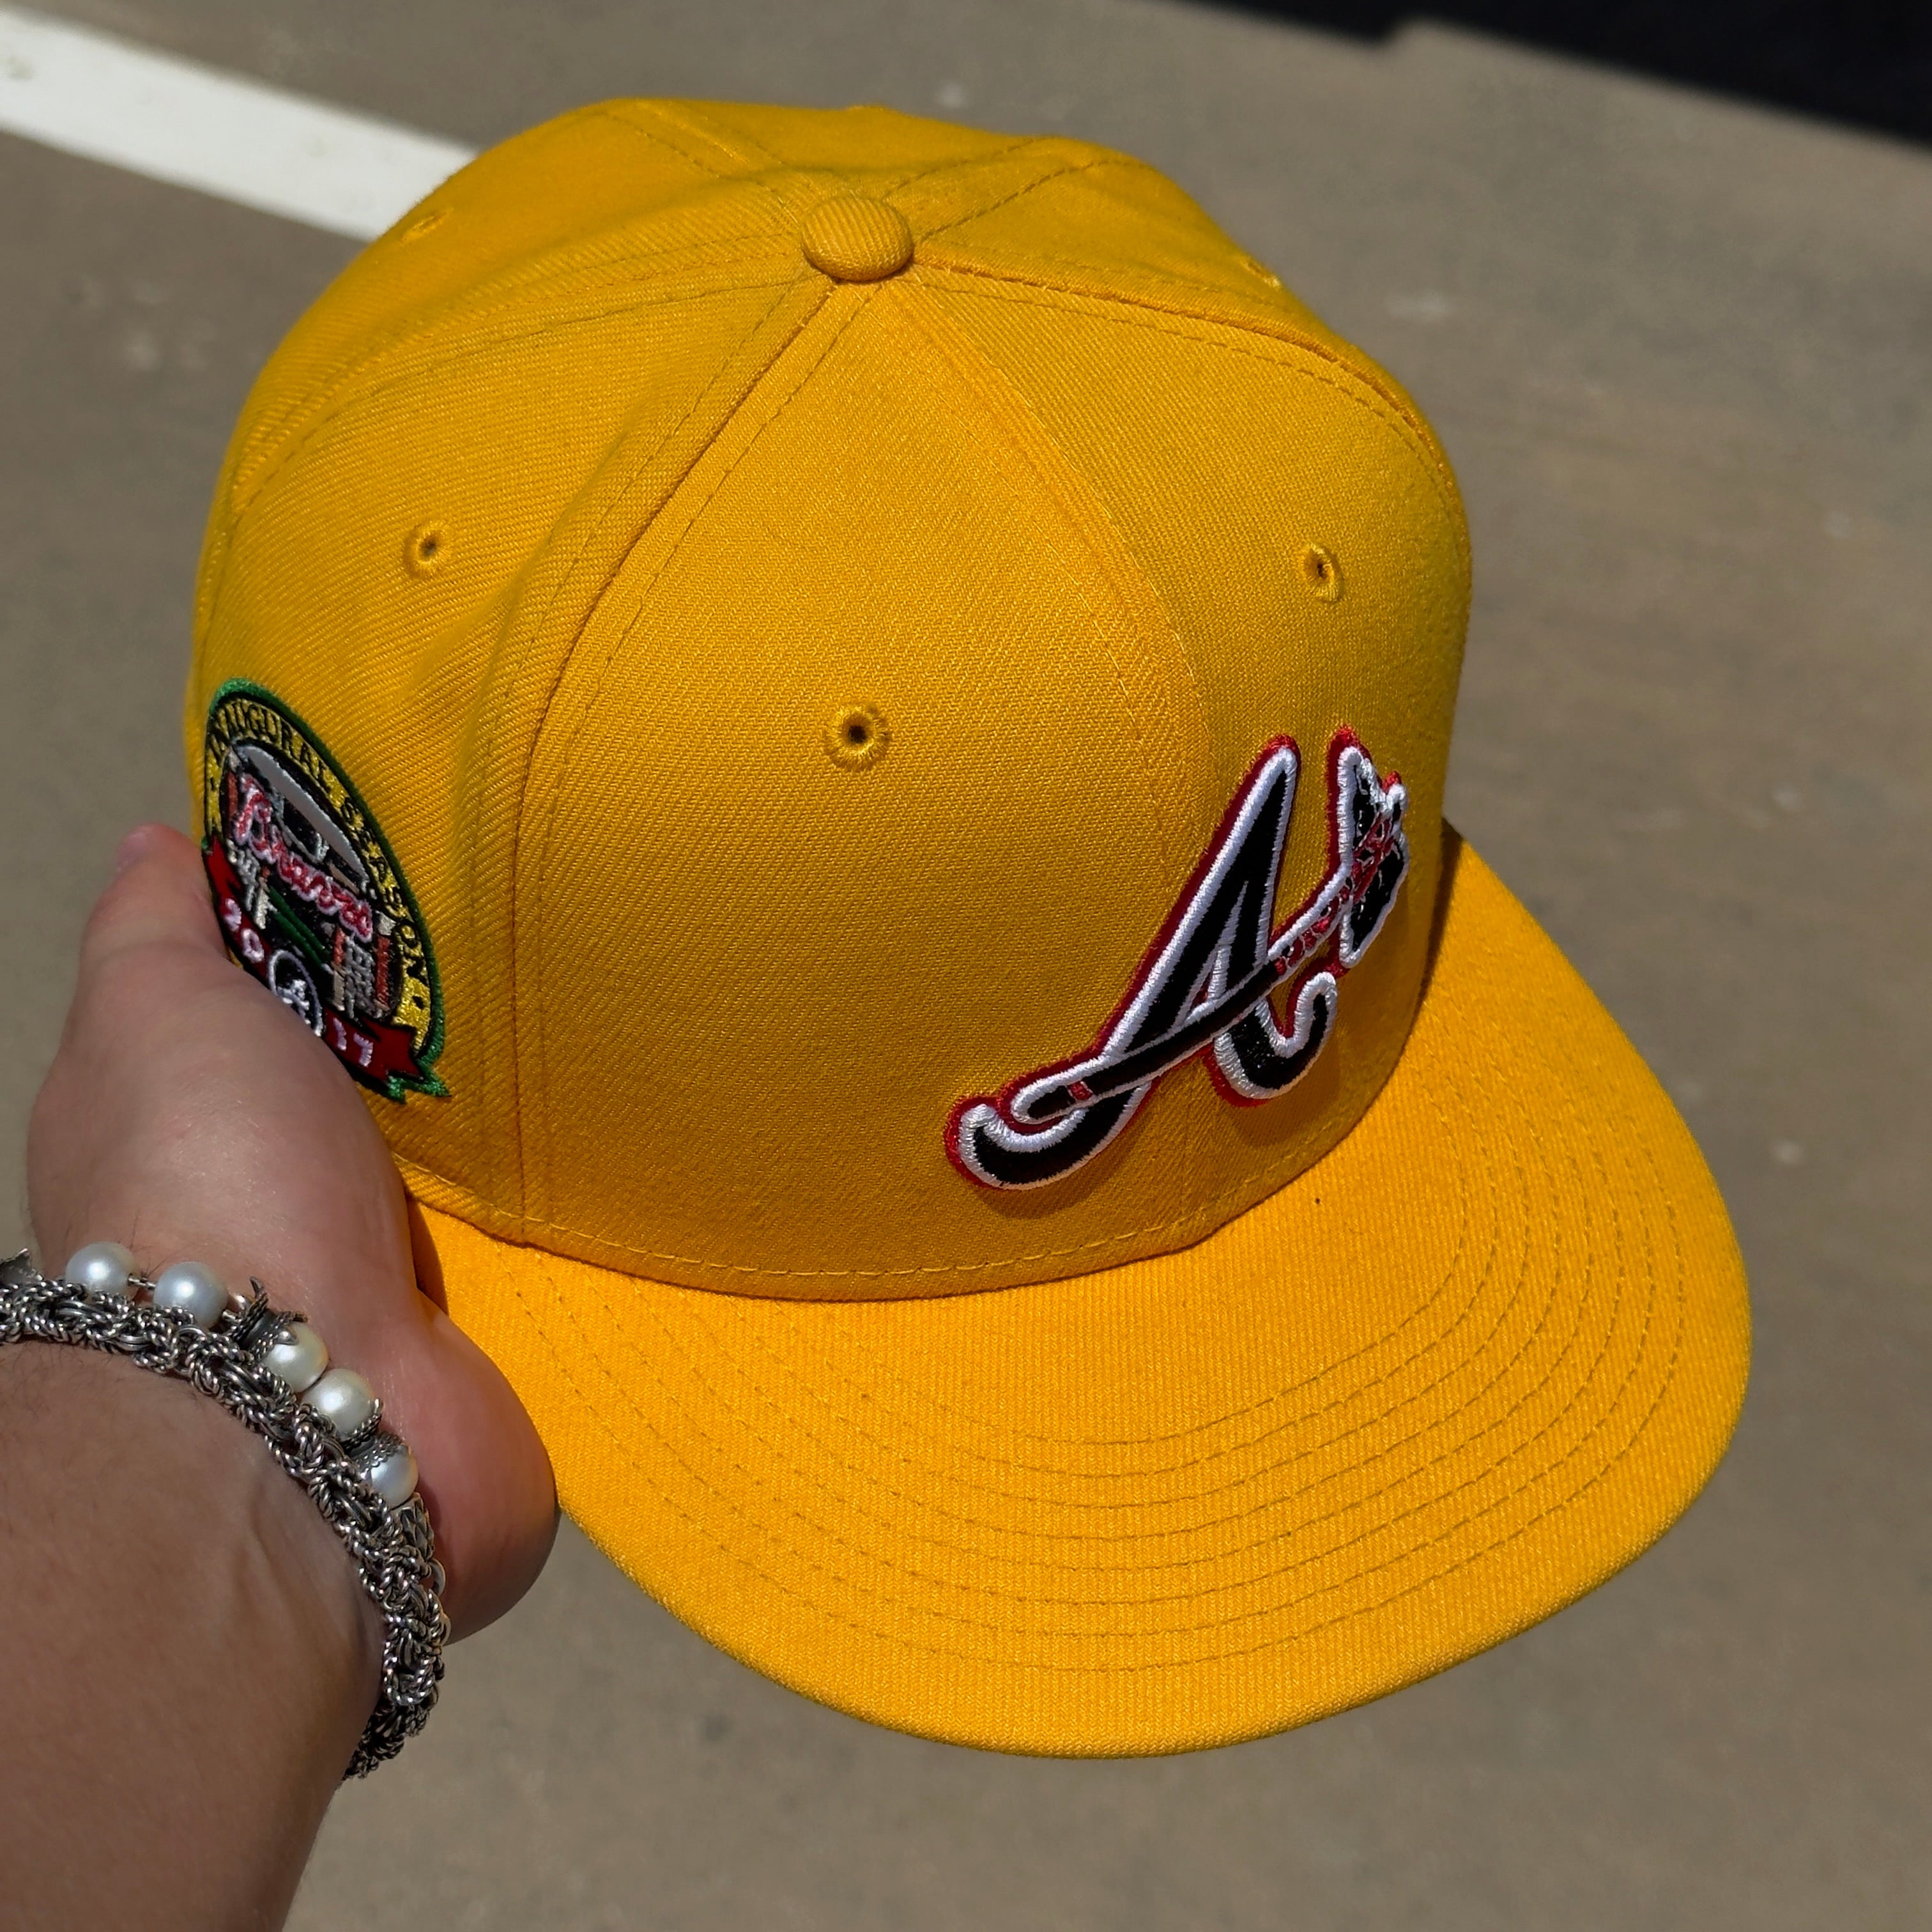 USED 3/8 Yellow Atlanta Braves Inaugural Season 2017 59FIFTY New Era Fitted Hat Cap